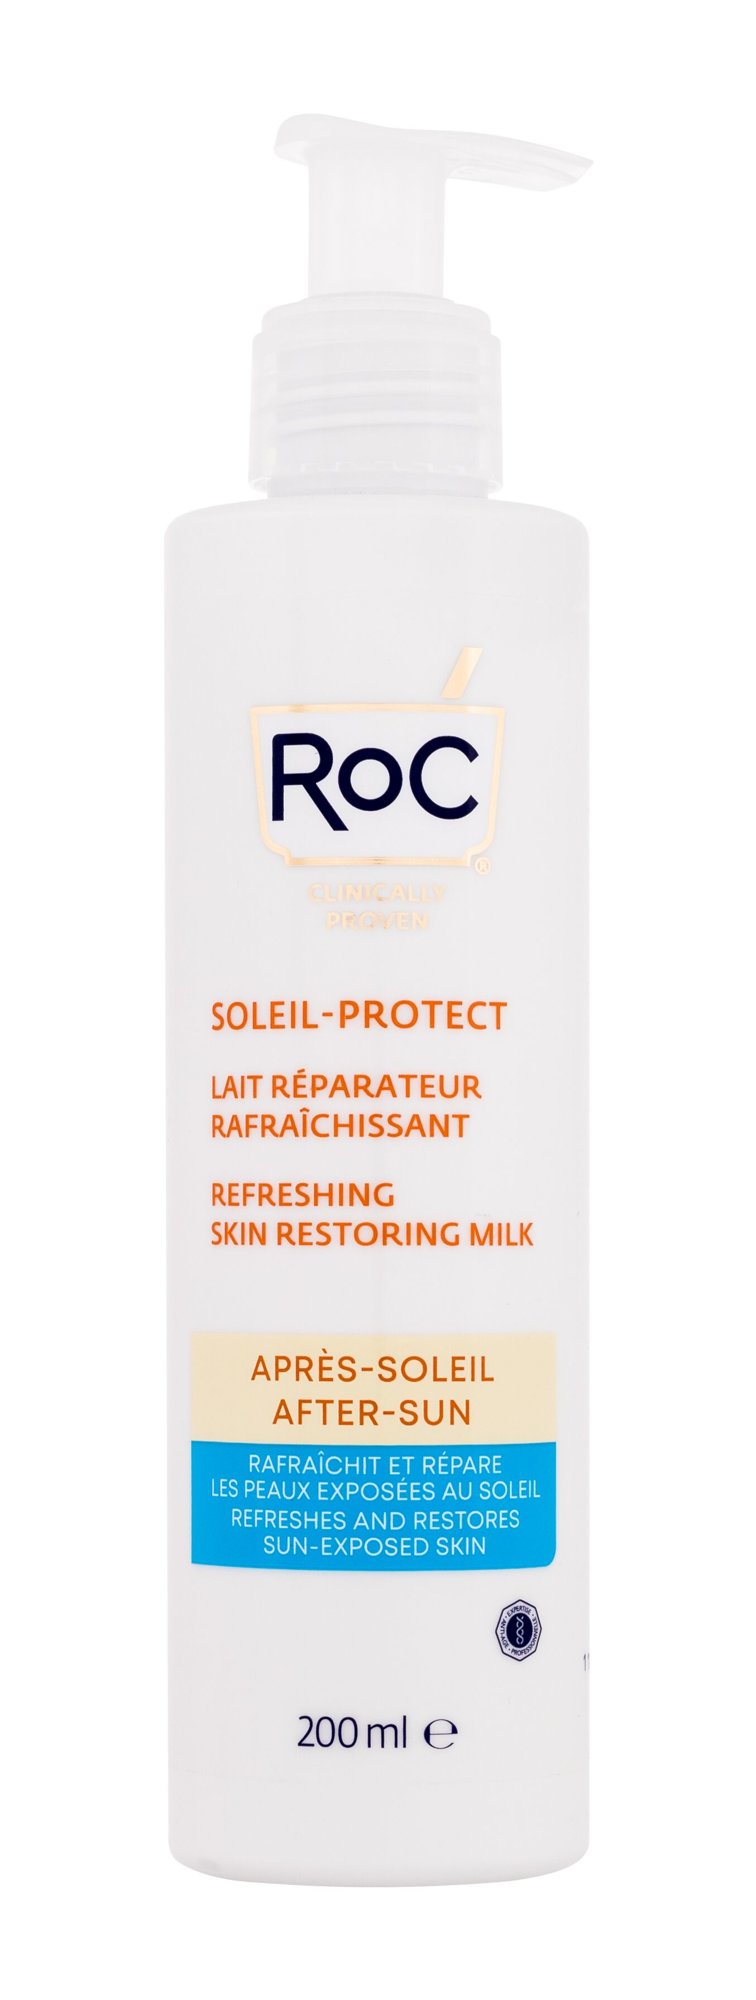 RoC Soleil-Protect Refreshing Skin Restoring Milk priemonė po deginimosi